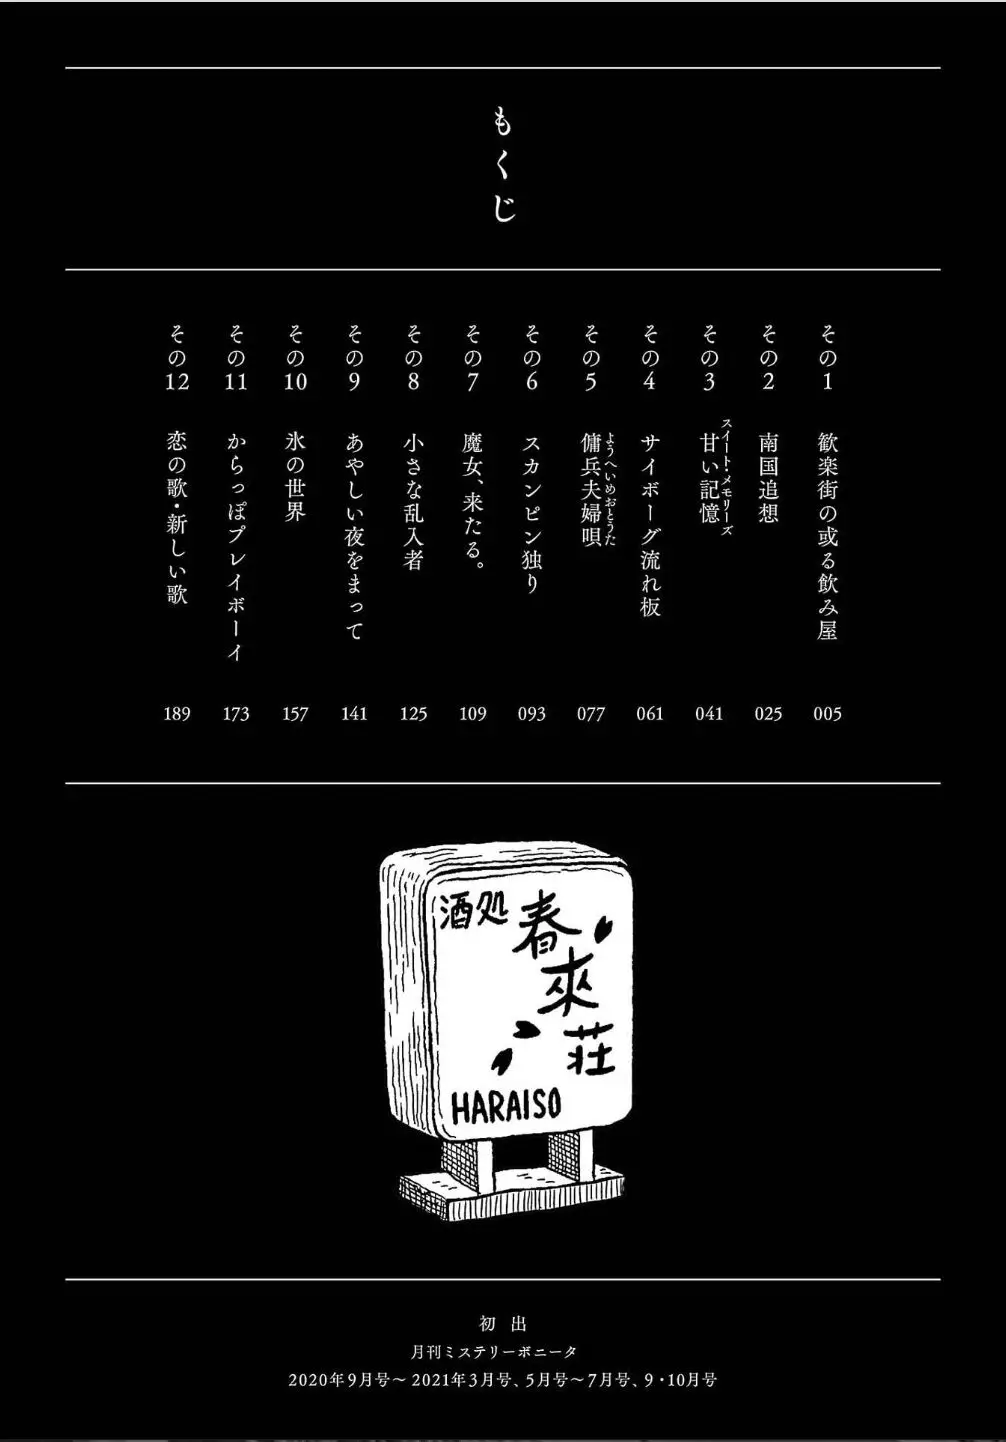 Haraiso Days - 0.1 page 5-6b1211e3